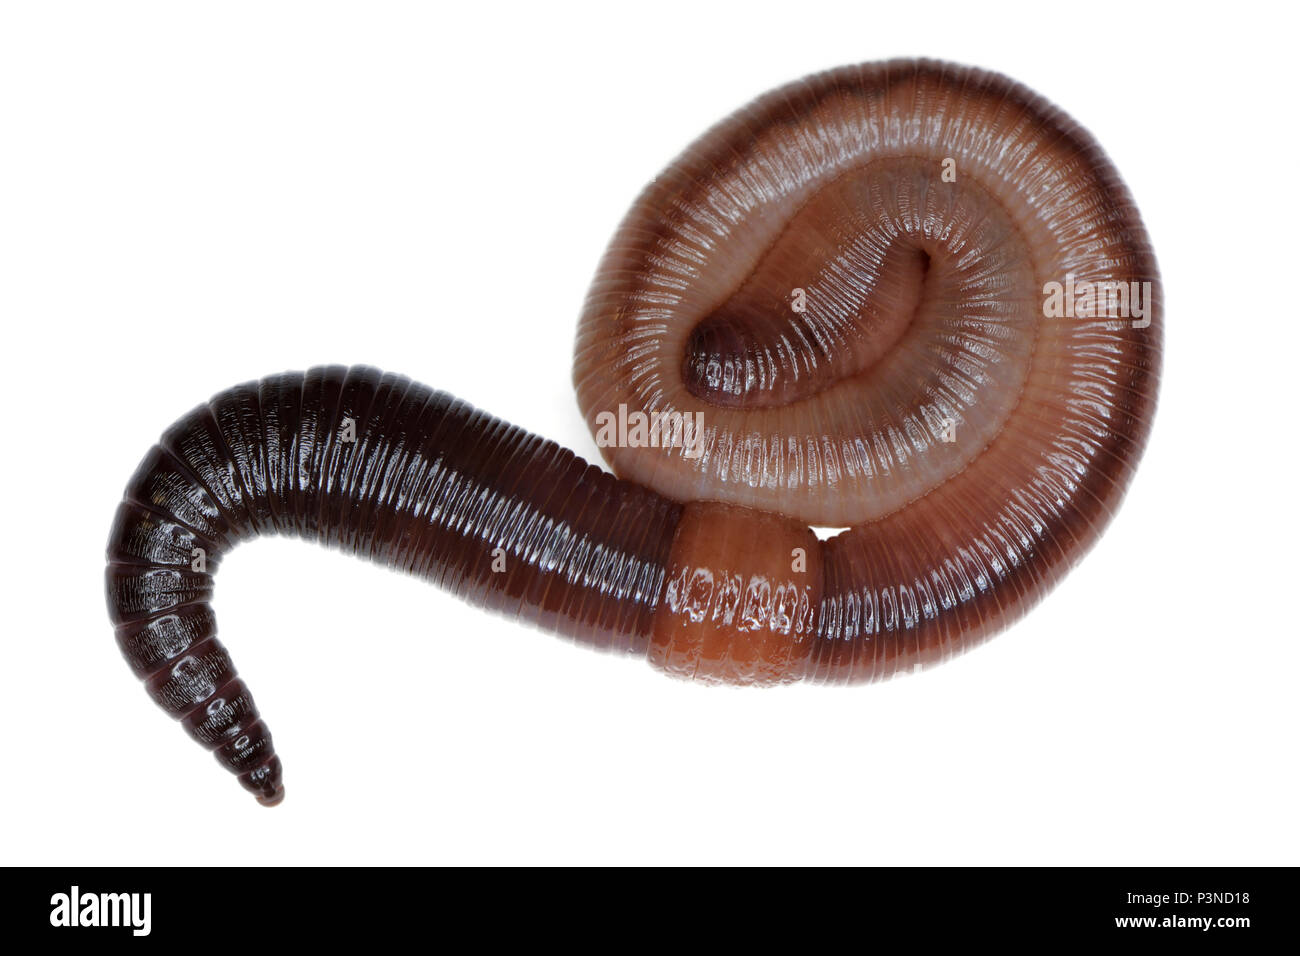 Common Earthworm (Lumbricus terrestris) in defensive posture, Germany Stock Photo